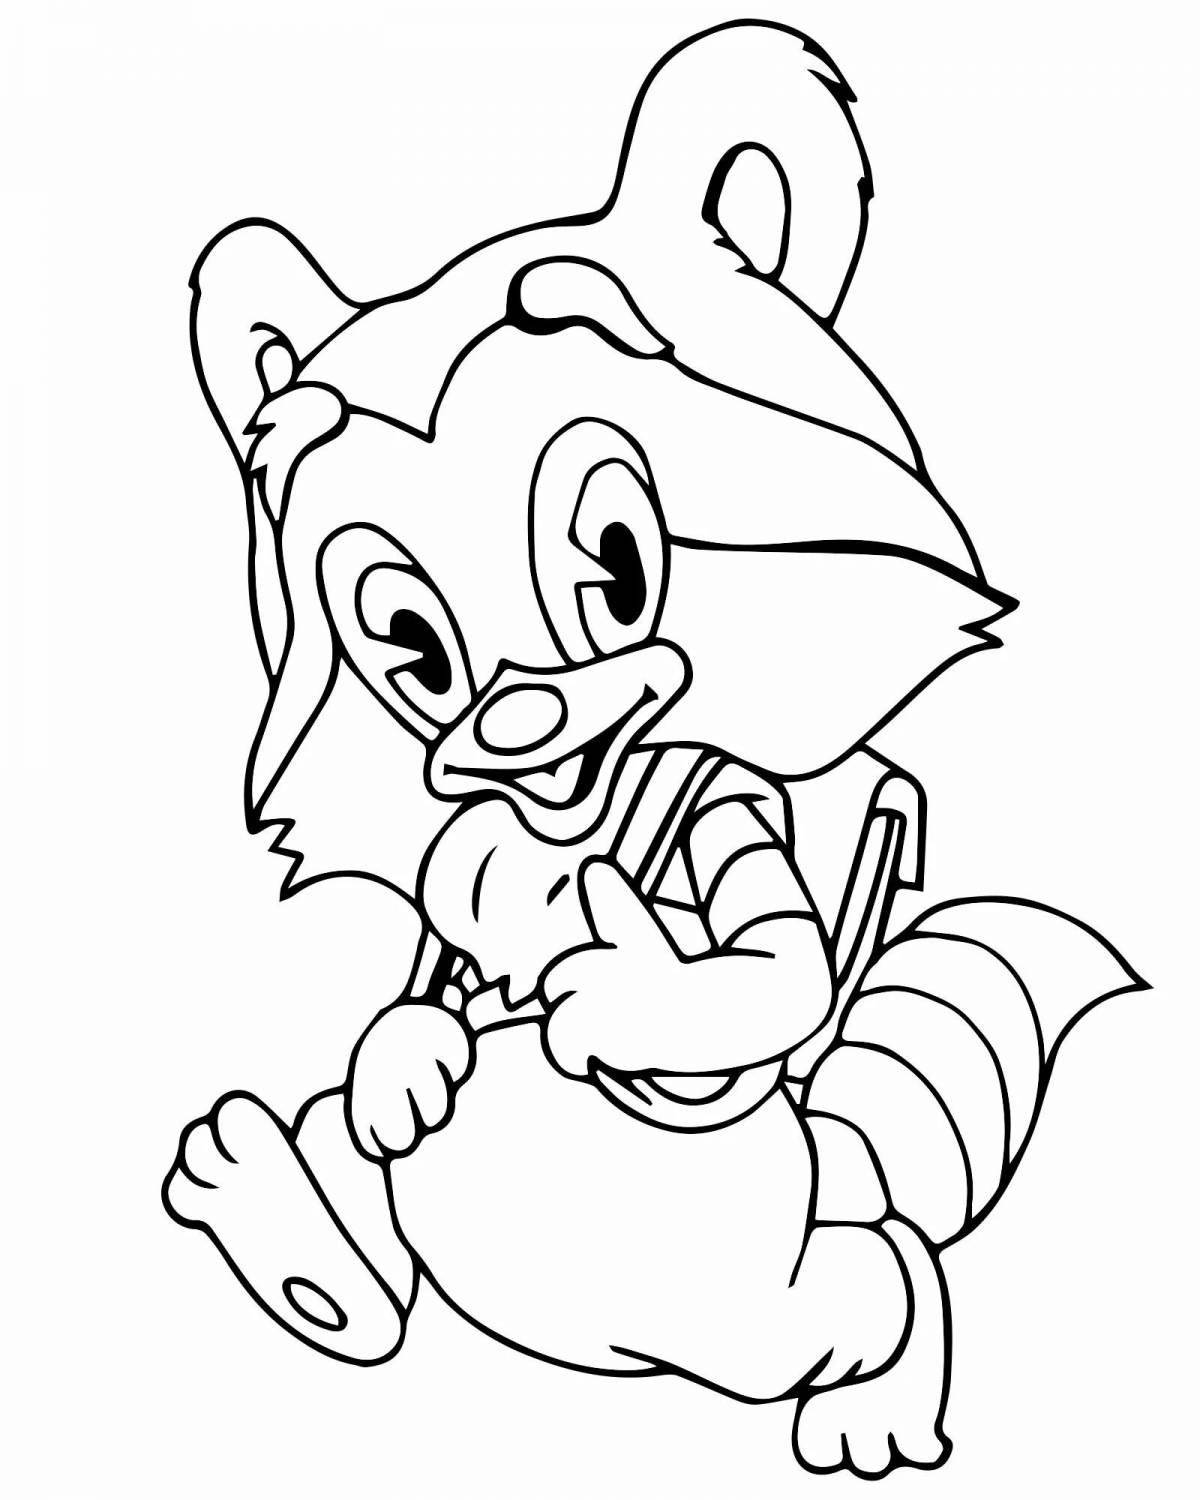 Adorable baby raccoon coloring book